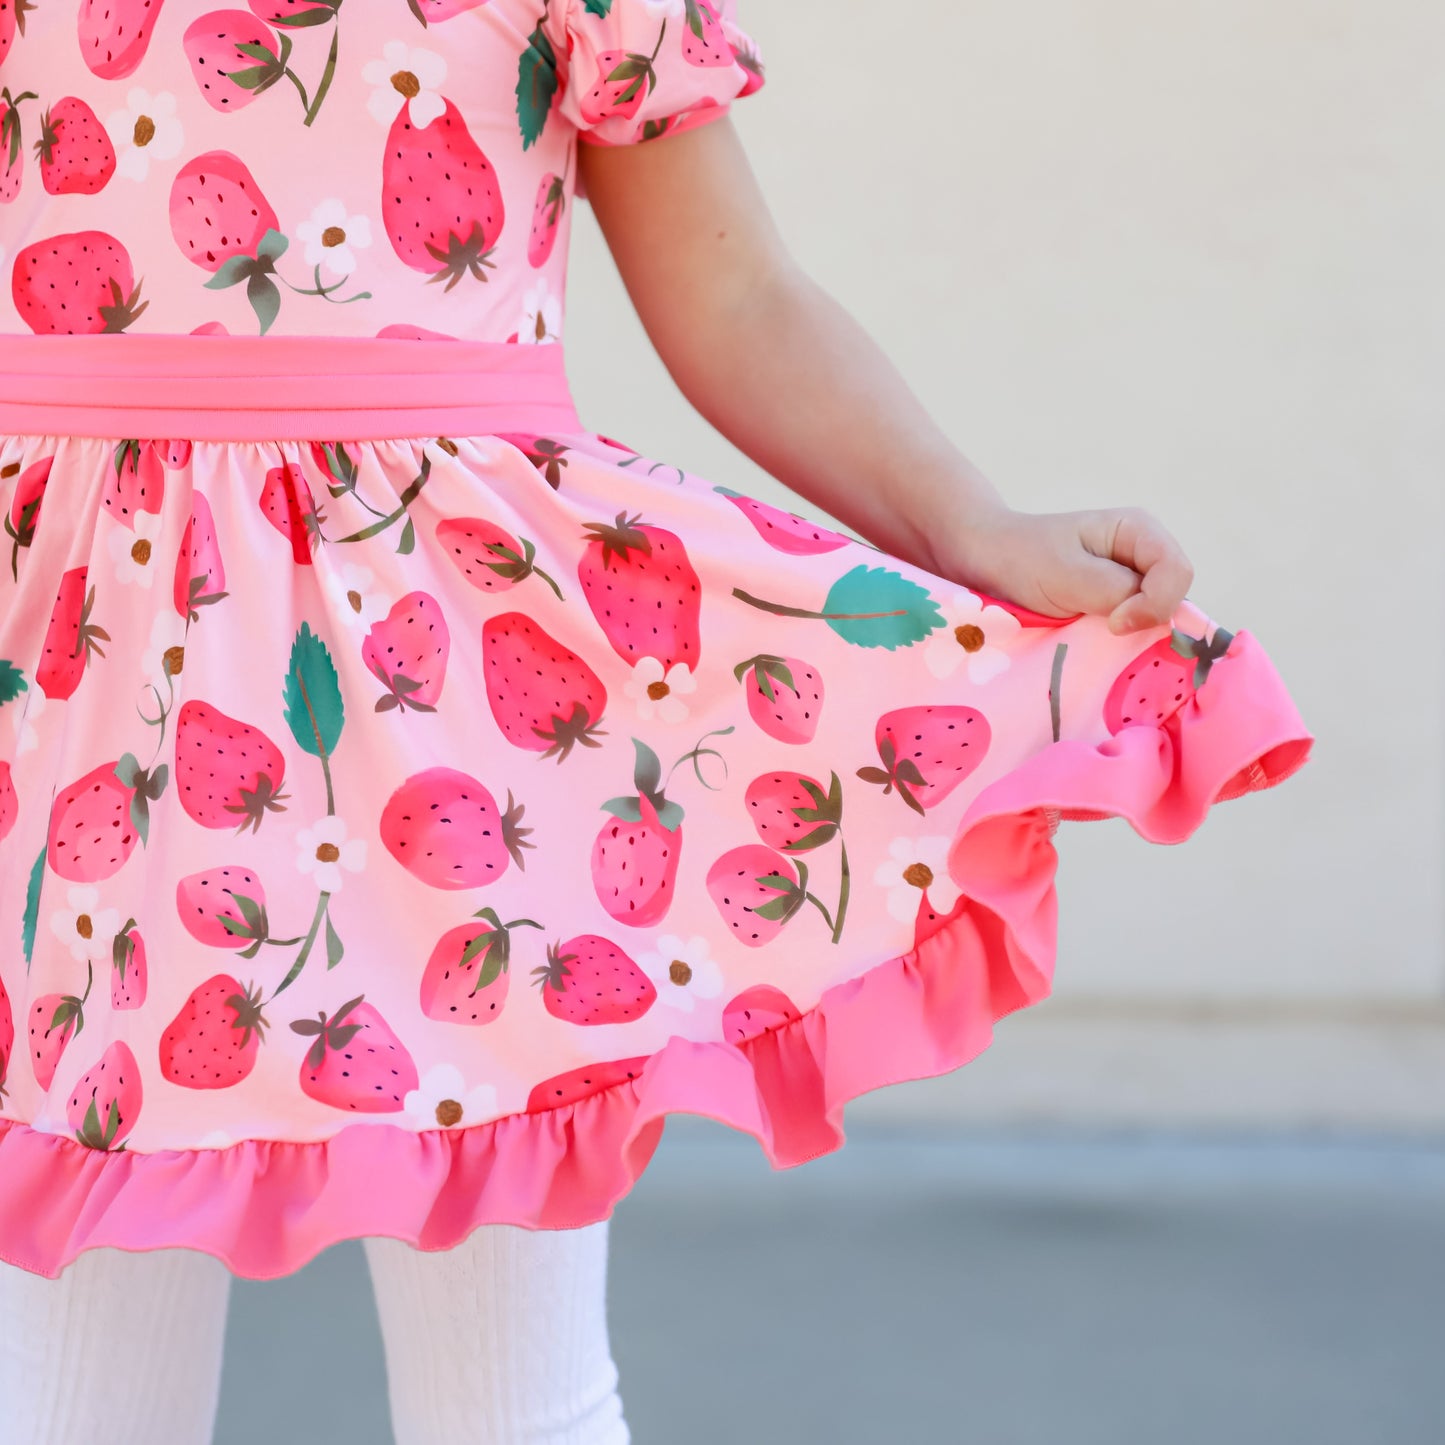 Strawberry vintage twirl dress